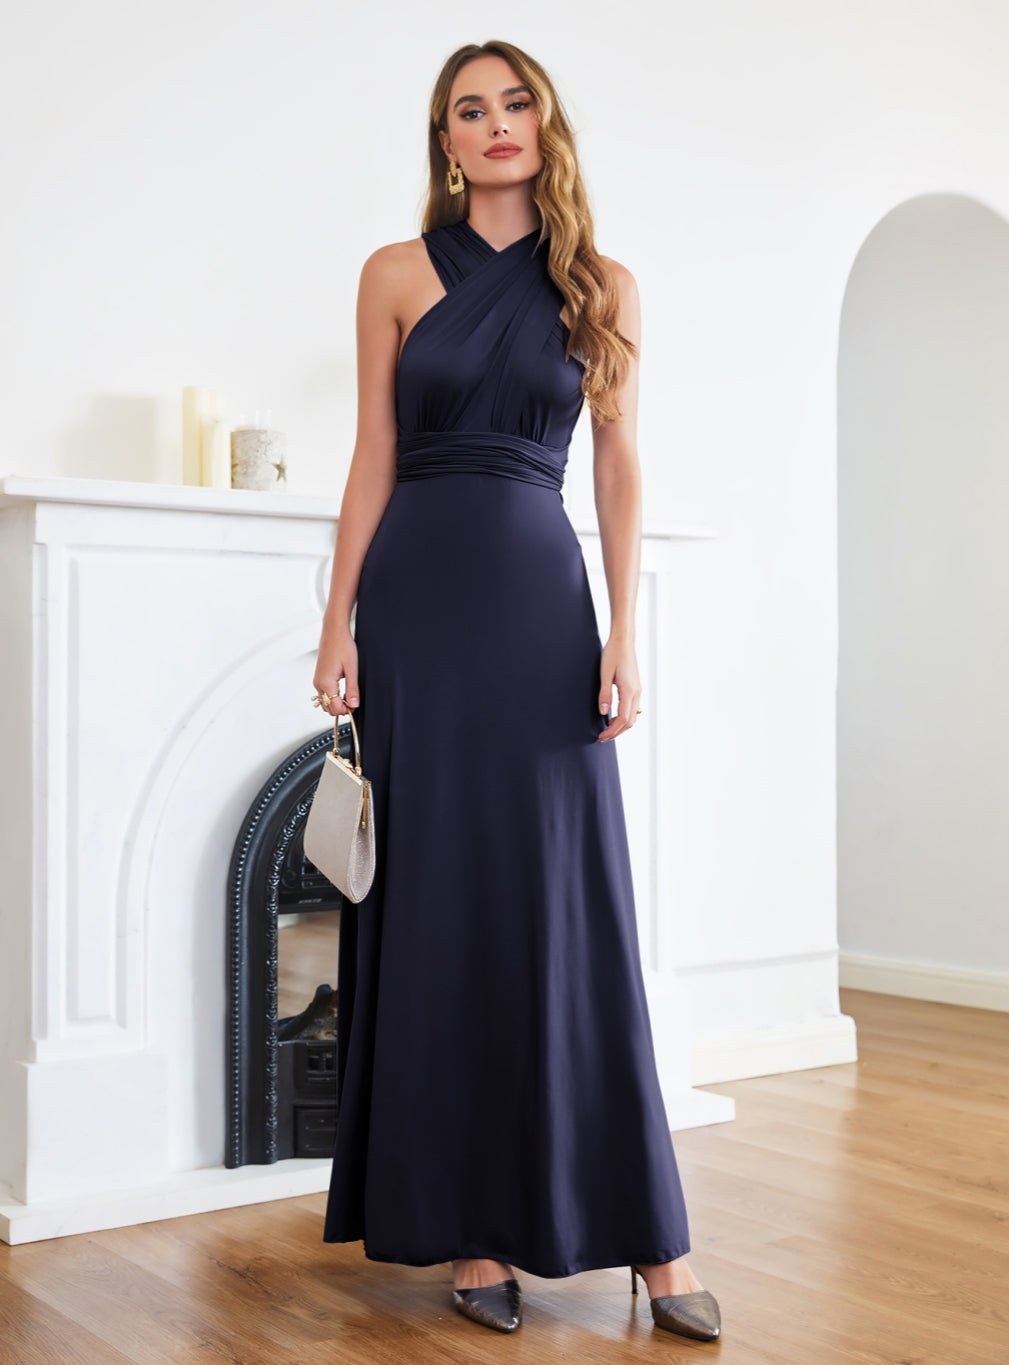 Infinity Dresses Convertible Gowns Floor-Length Dresses - 27Dress